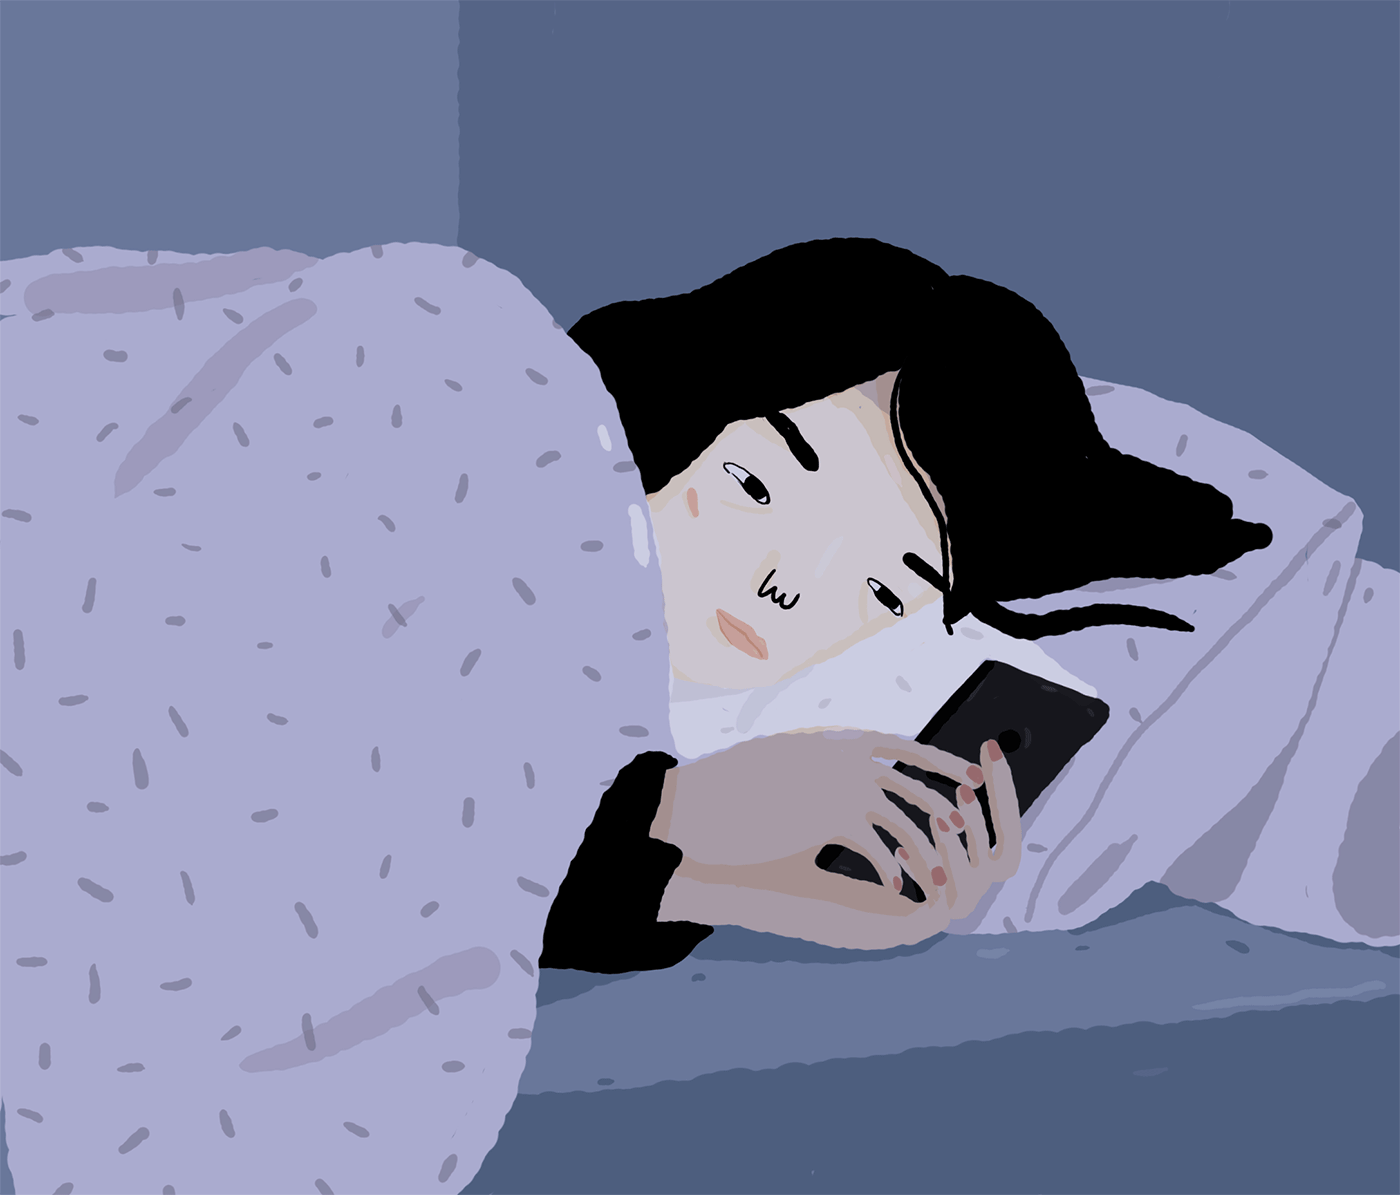 Sleeping animation. Сон иллюстрация. Сон мультипликация. Сонная девушка иллюстрация.